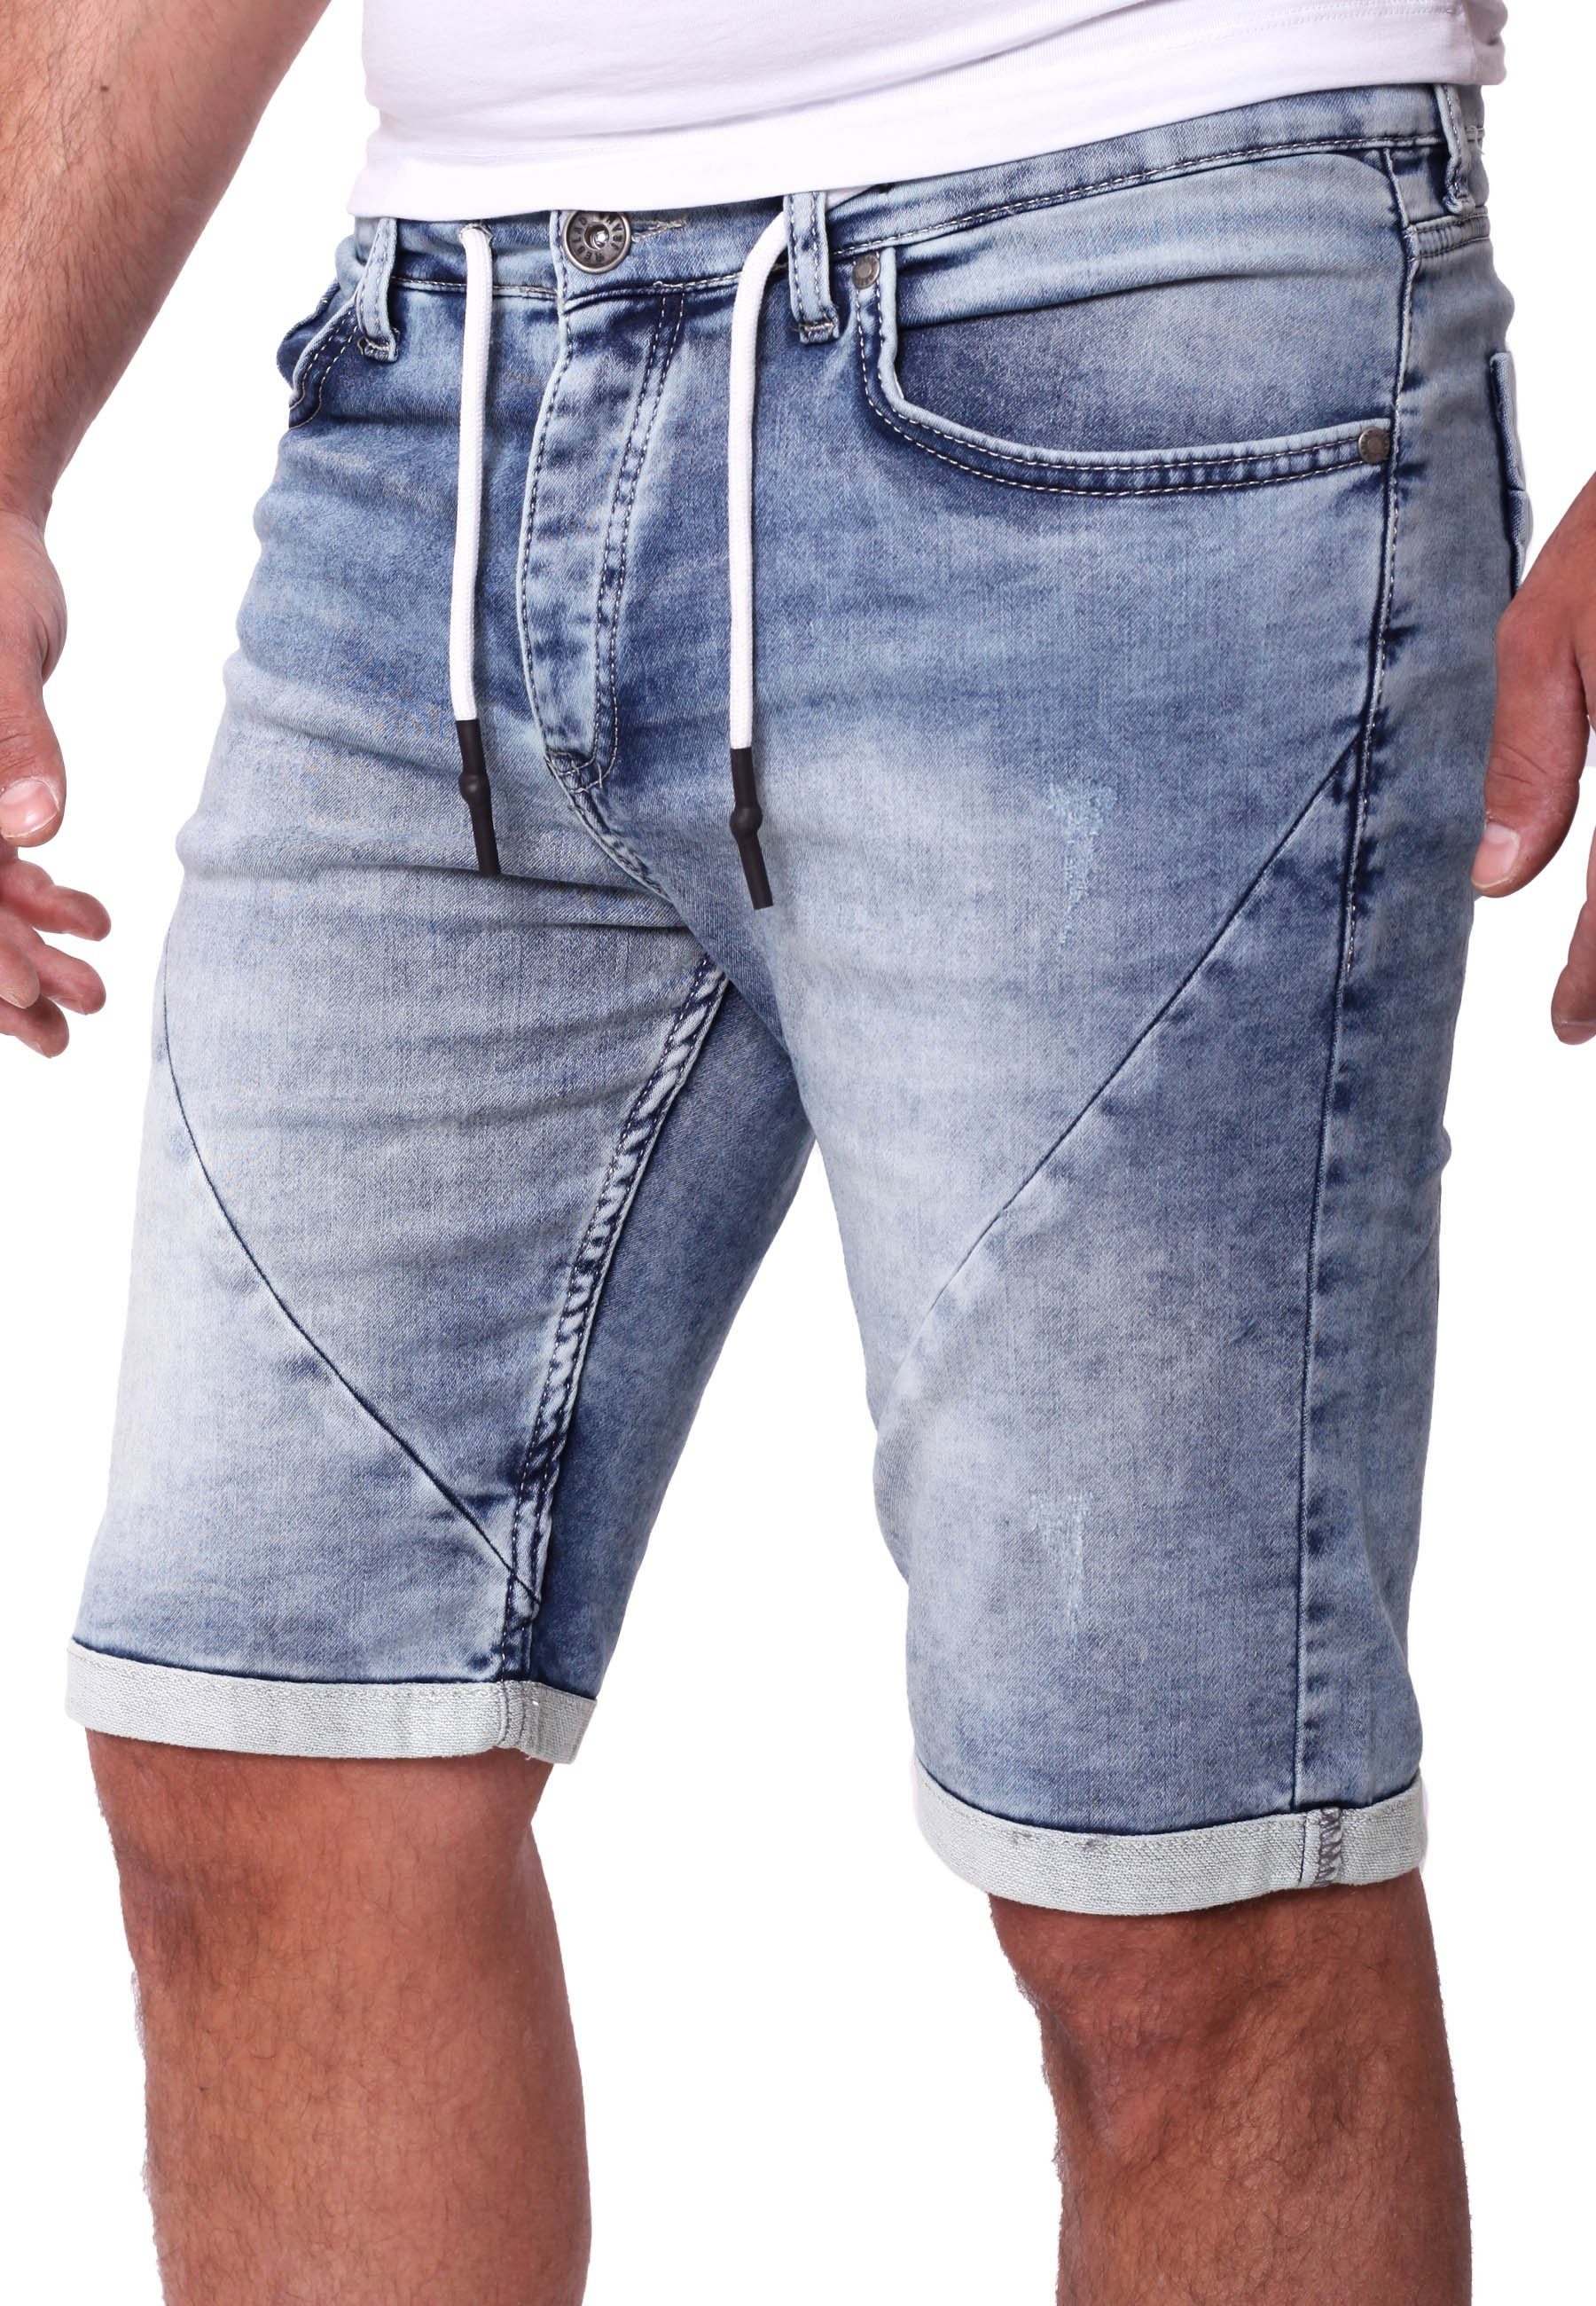 Reslad Jeansshorts Reslad Jeans Shorts Herren Kurze Hosen Sommer - Jeans- Shorts Sweatjeans Jeansbermudas Stretch Jeans-Hose